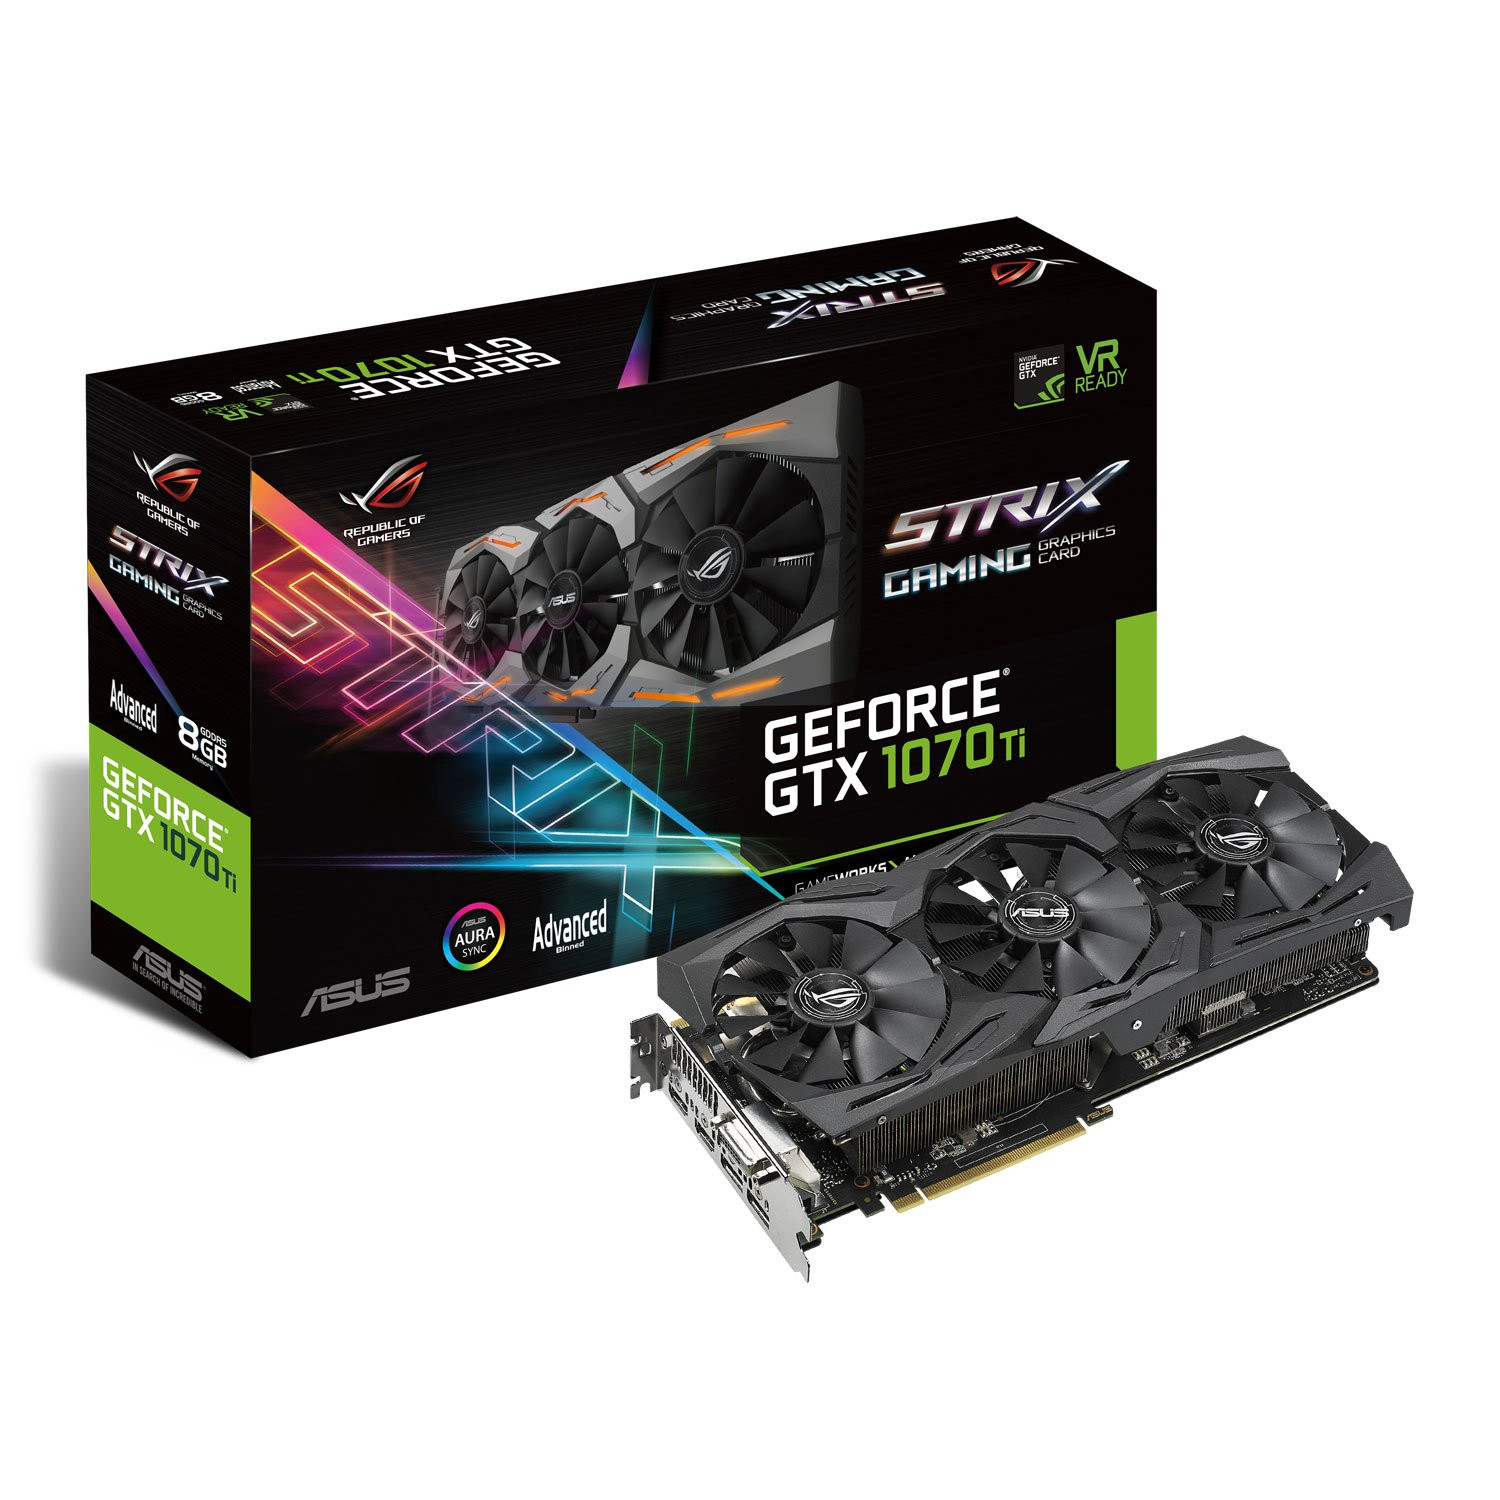 ASUS NVIDIA GeForce GTX 1070 Ti 8GB ADVANCED GAMING Strix - VR Ready